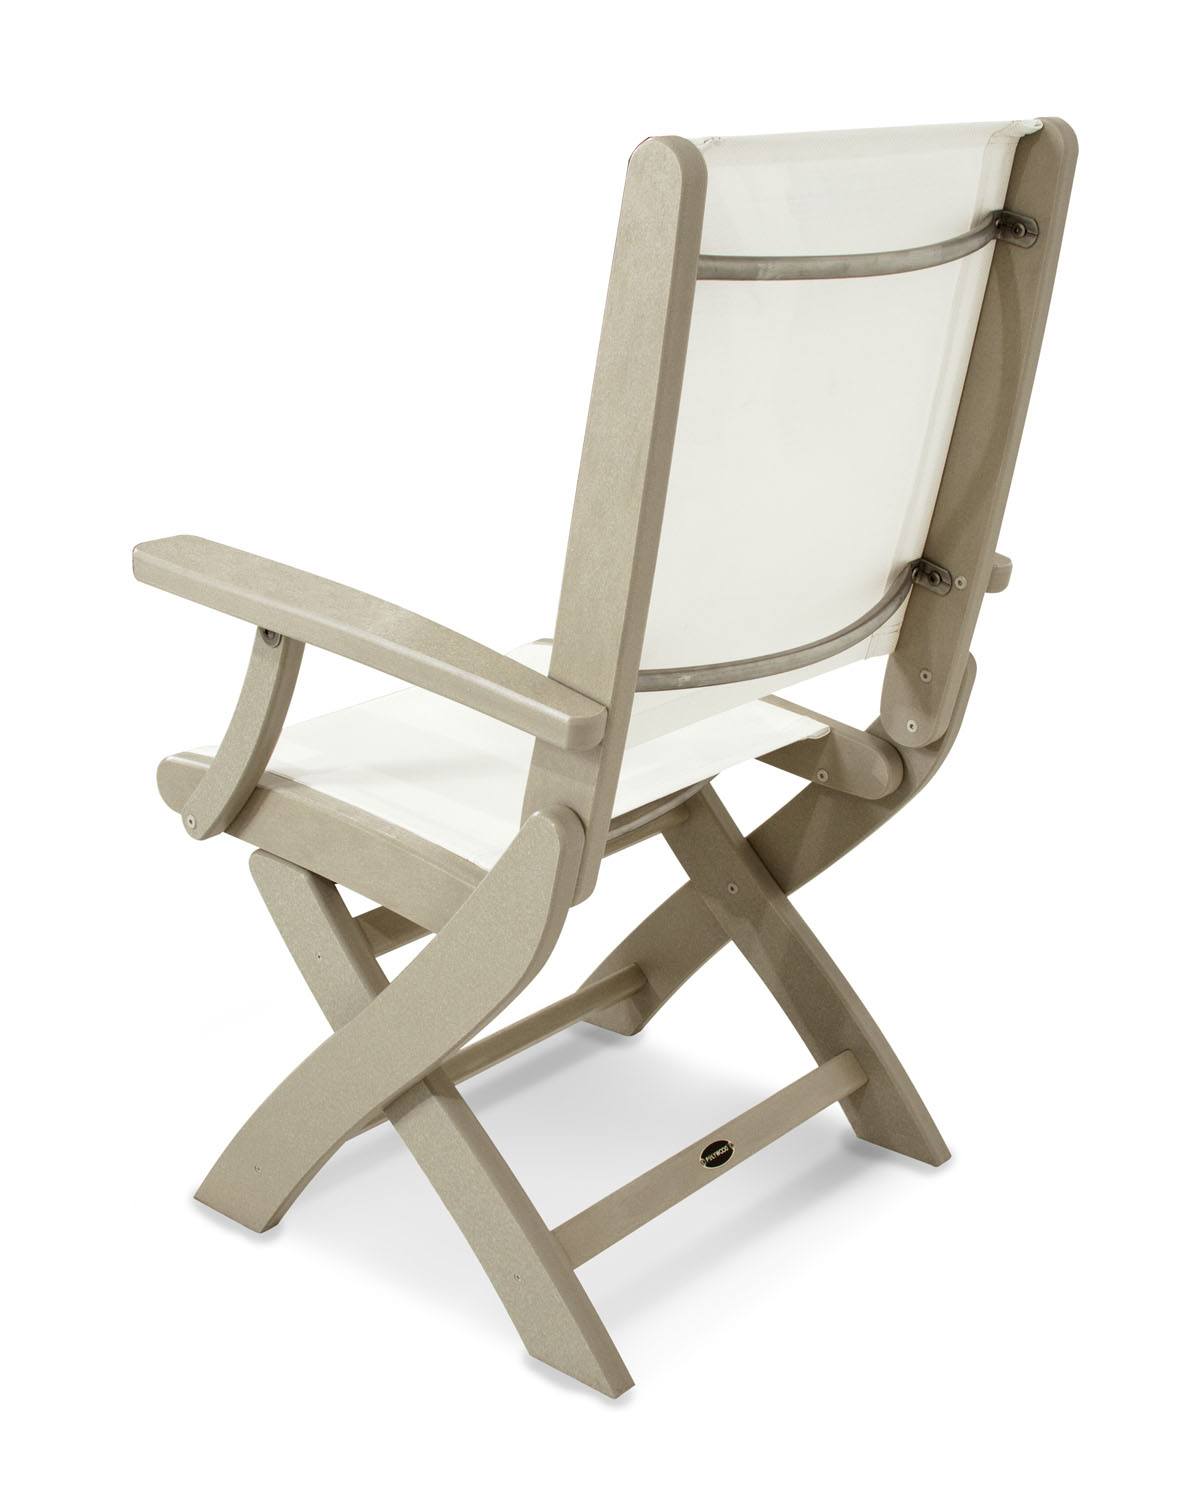 POLYWOOD® Coastal Folding Chair - Sand/White